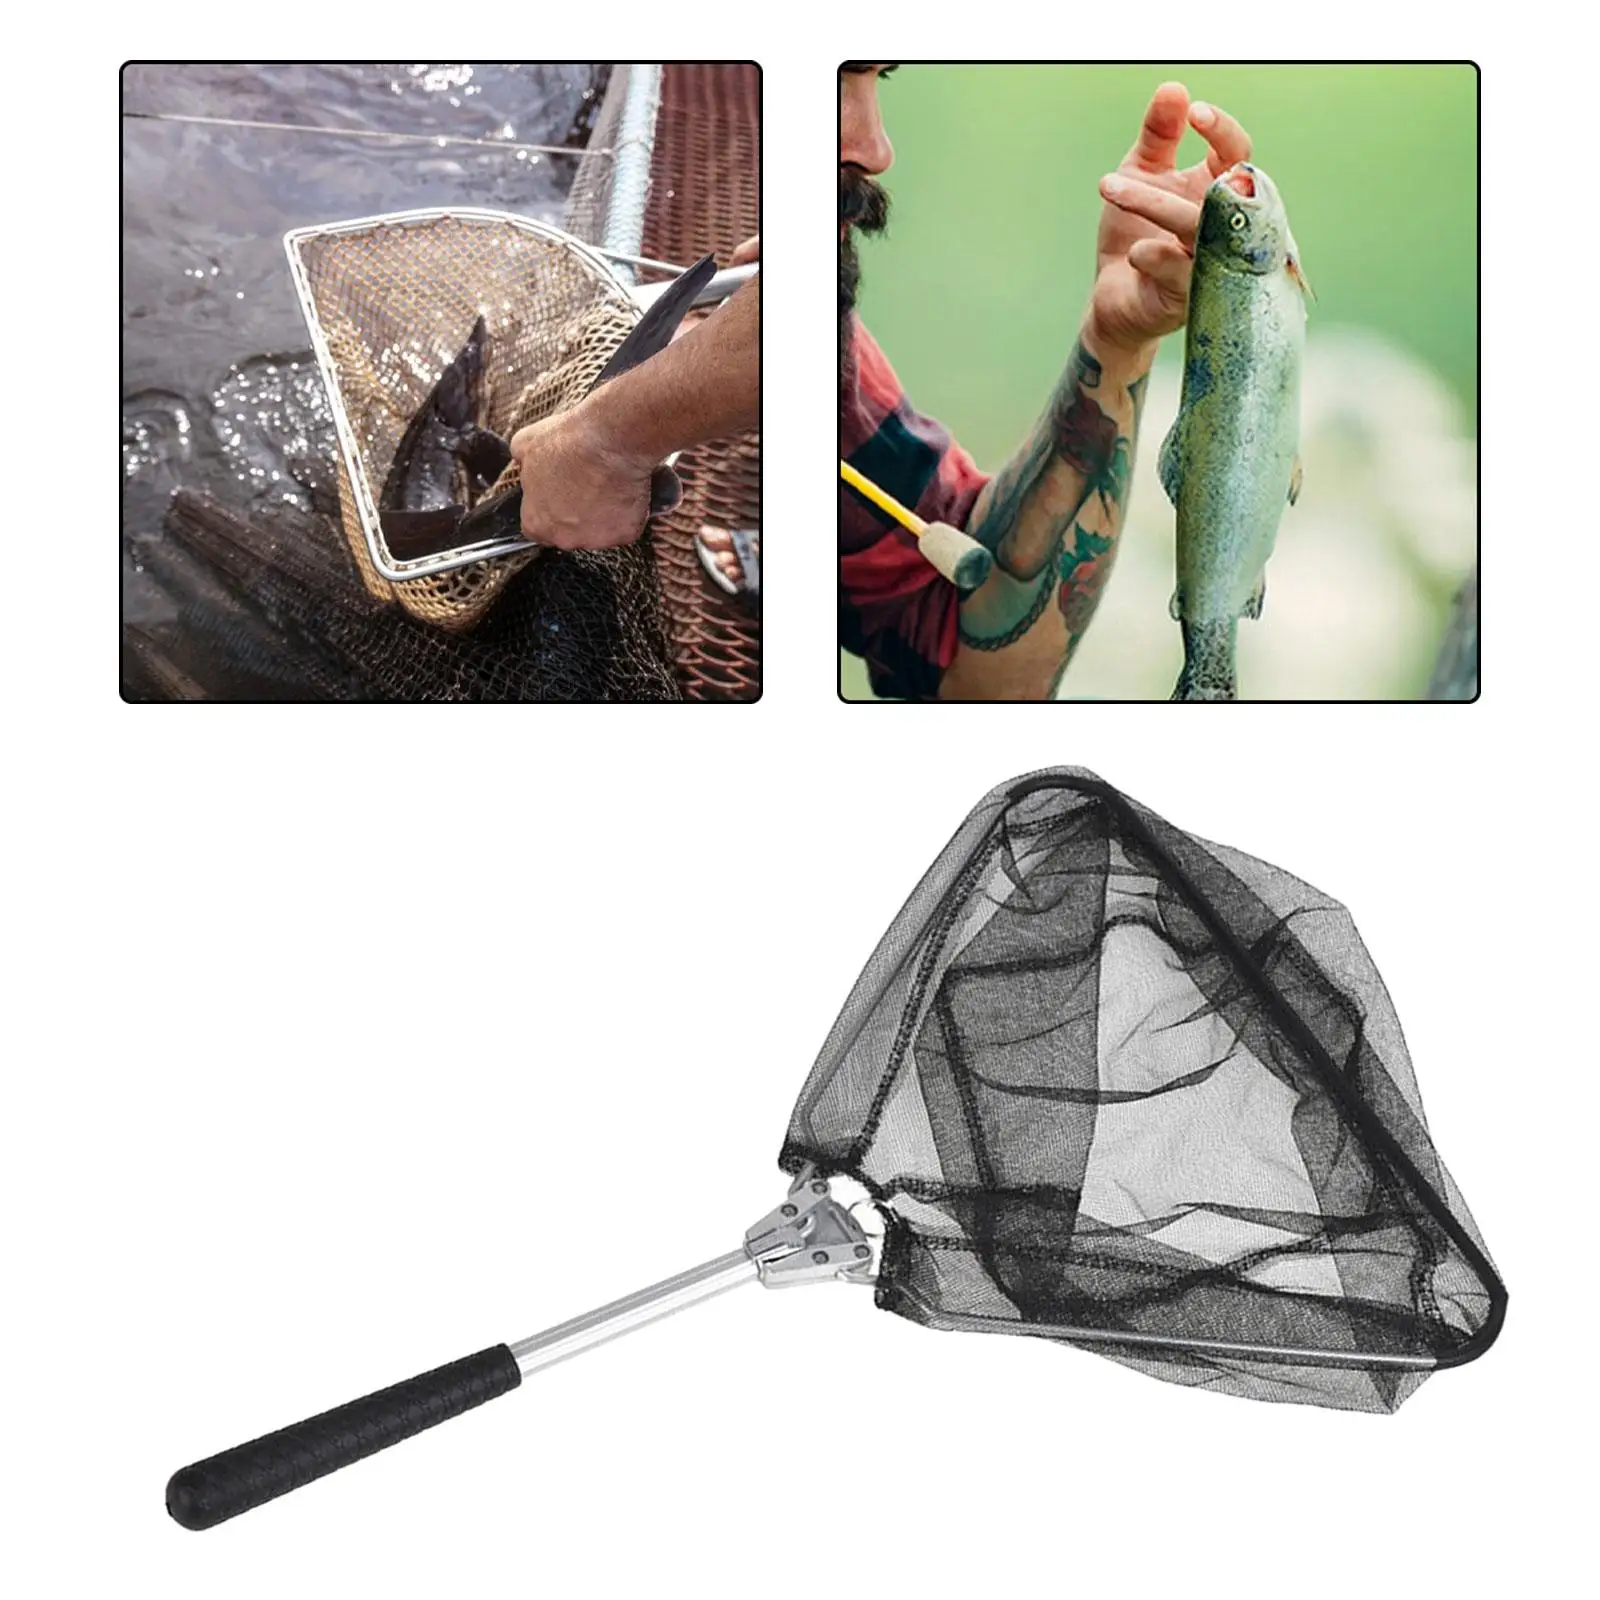 Fishing Landing Net Professional Aluminium Alloy Non Slip Grip Telescopic Pole Handle Collapsible Fish Net for Women Men Kids